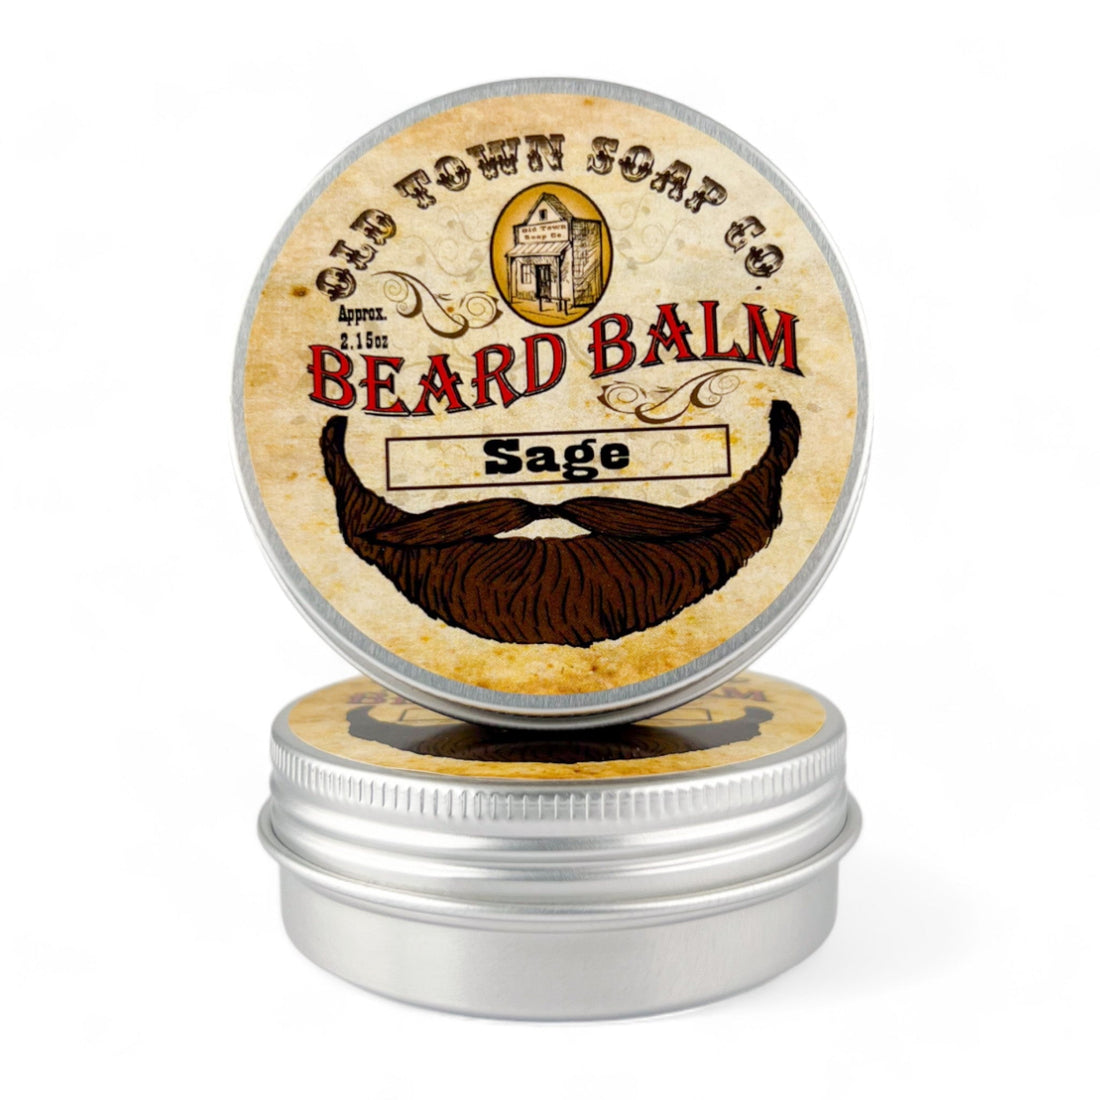 Sage Beard Balm - Old Town Soap Co.